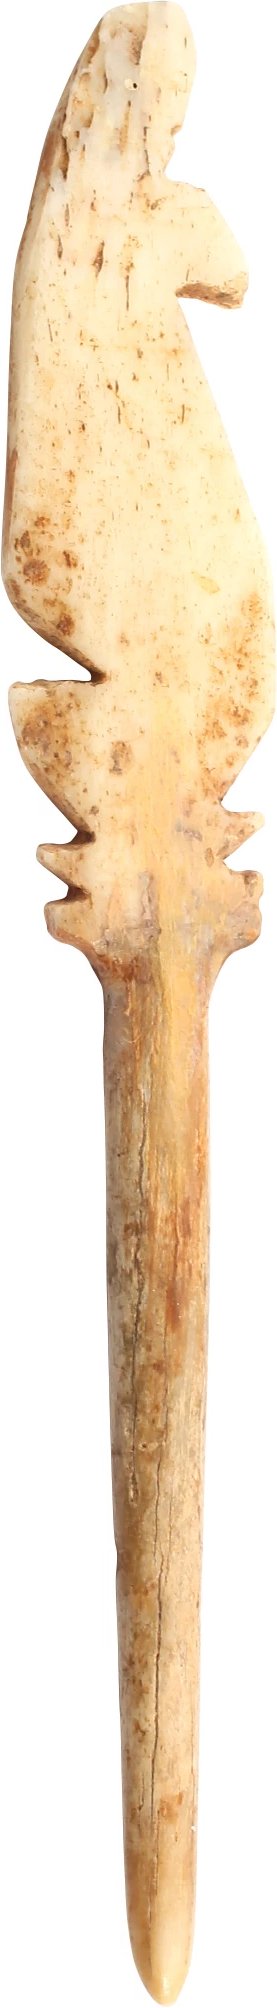 ANCIENT EGYPTIAN BONE HAIR ORNAMENT. Coptic Period, 3rd-5th century AD, - Fagan Arms